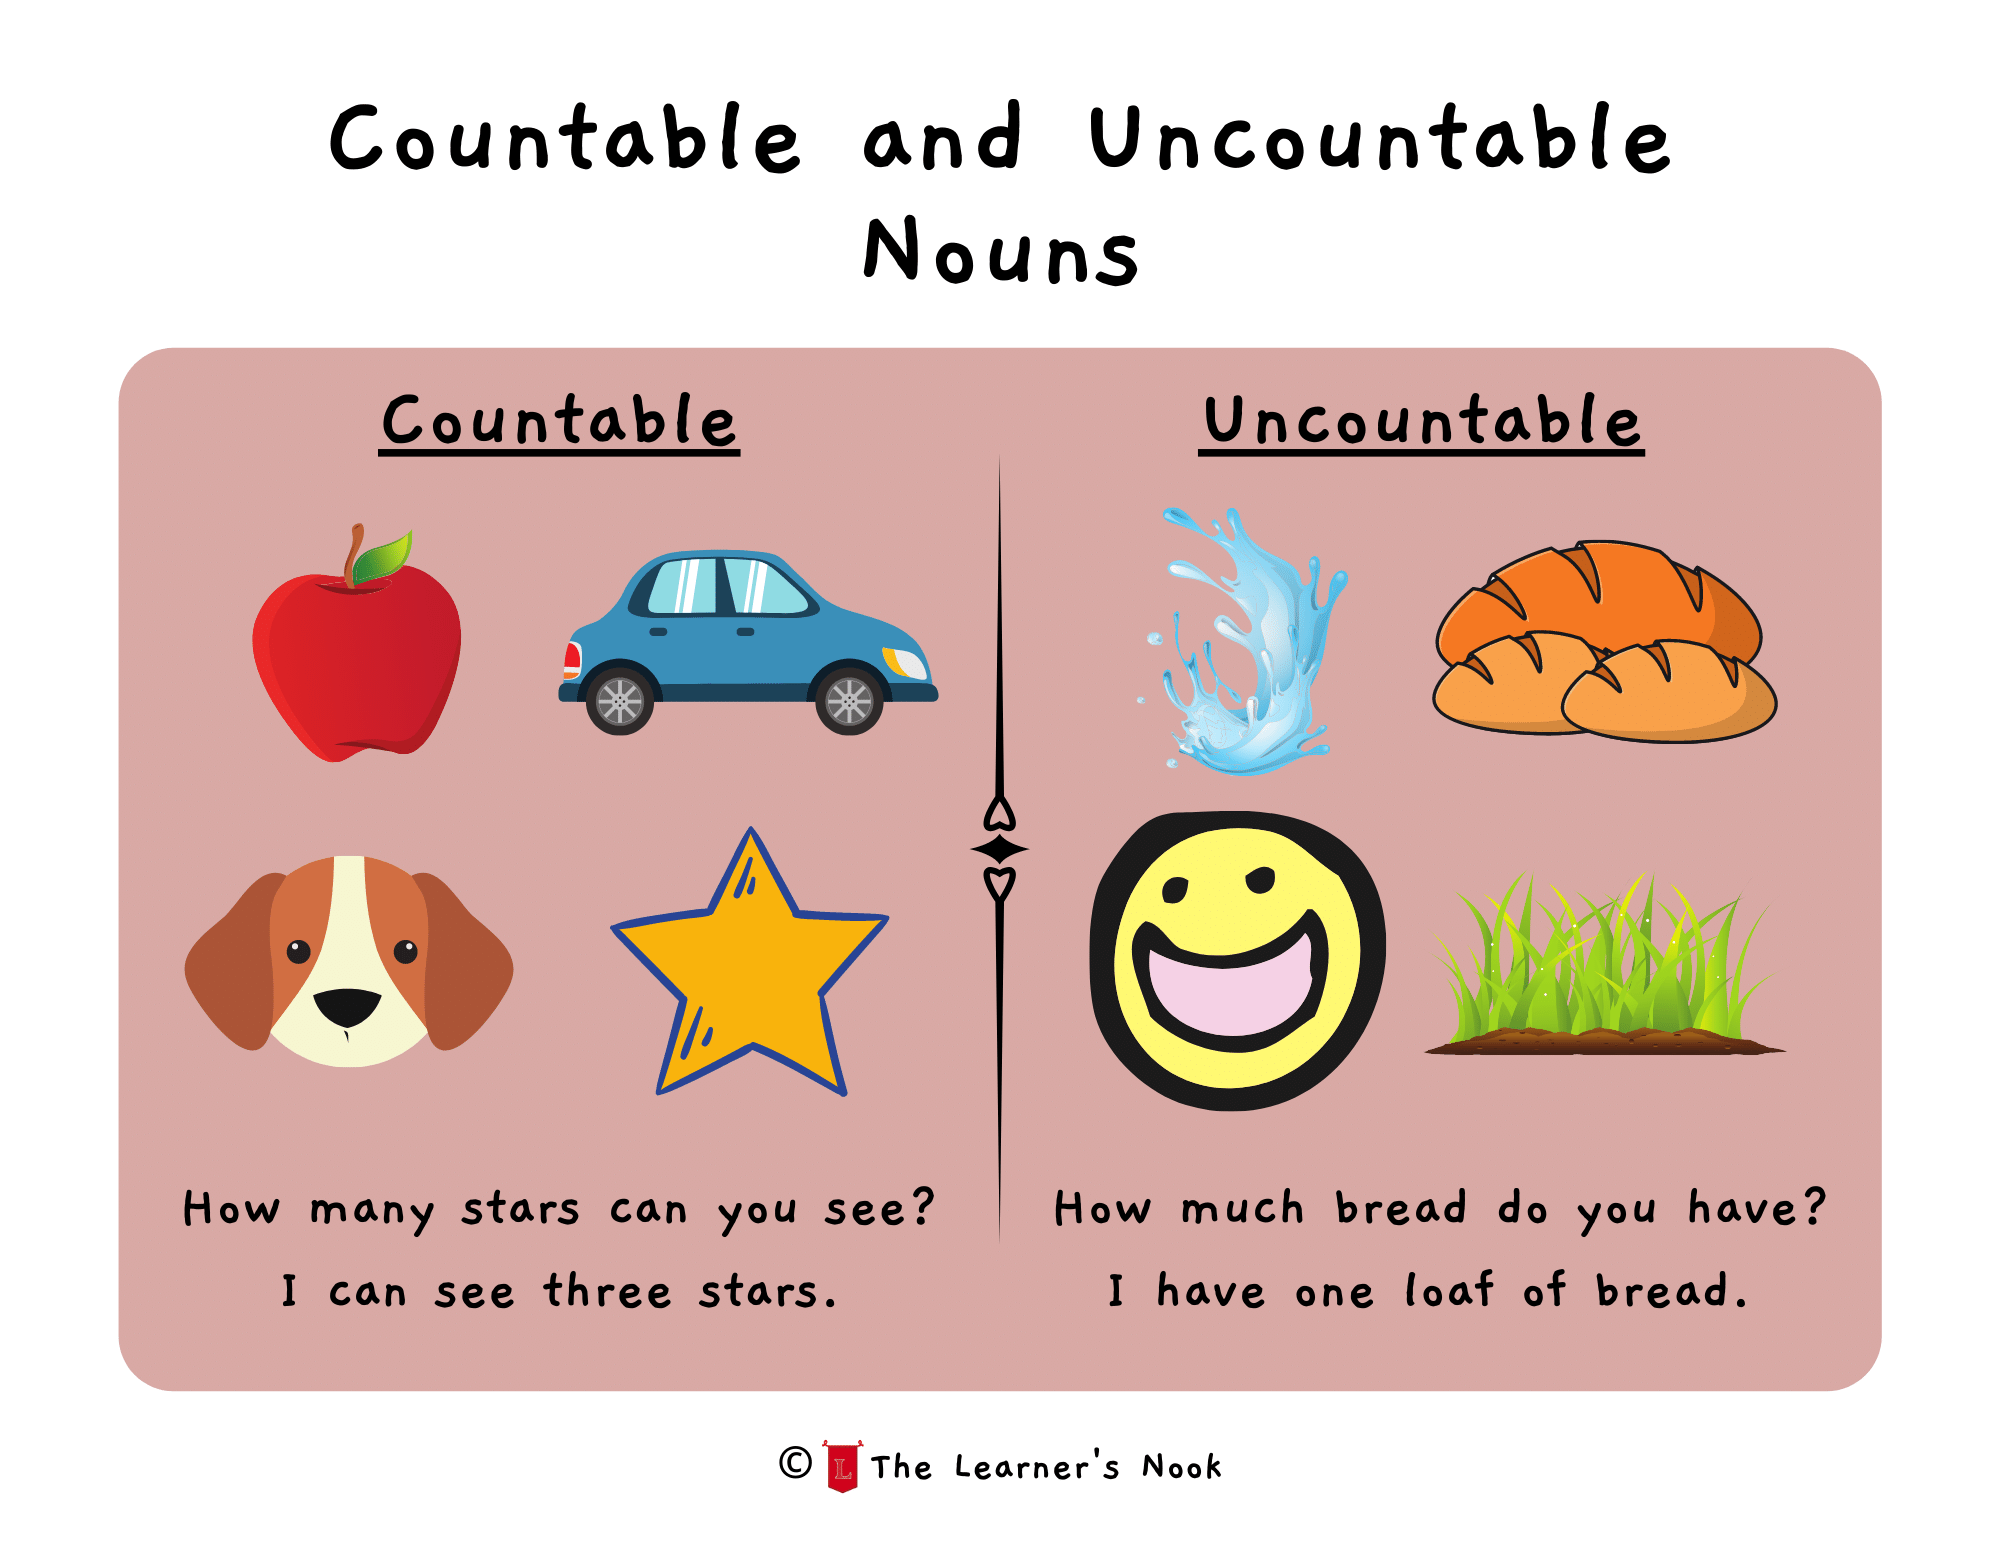 is homework countable or uncountable noun